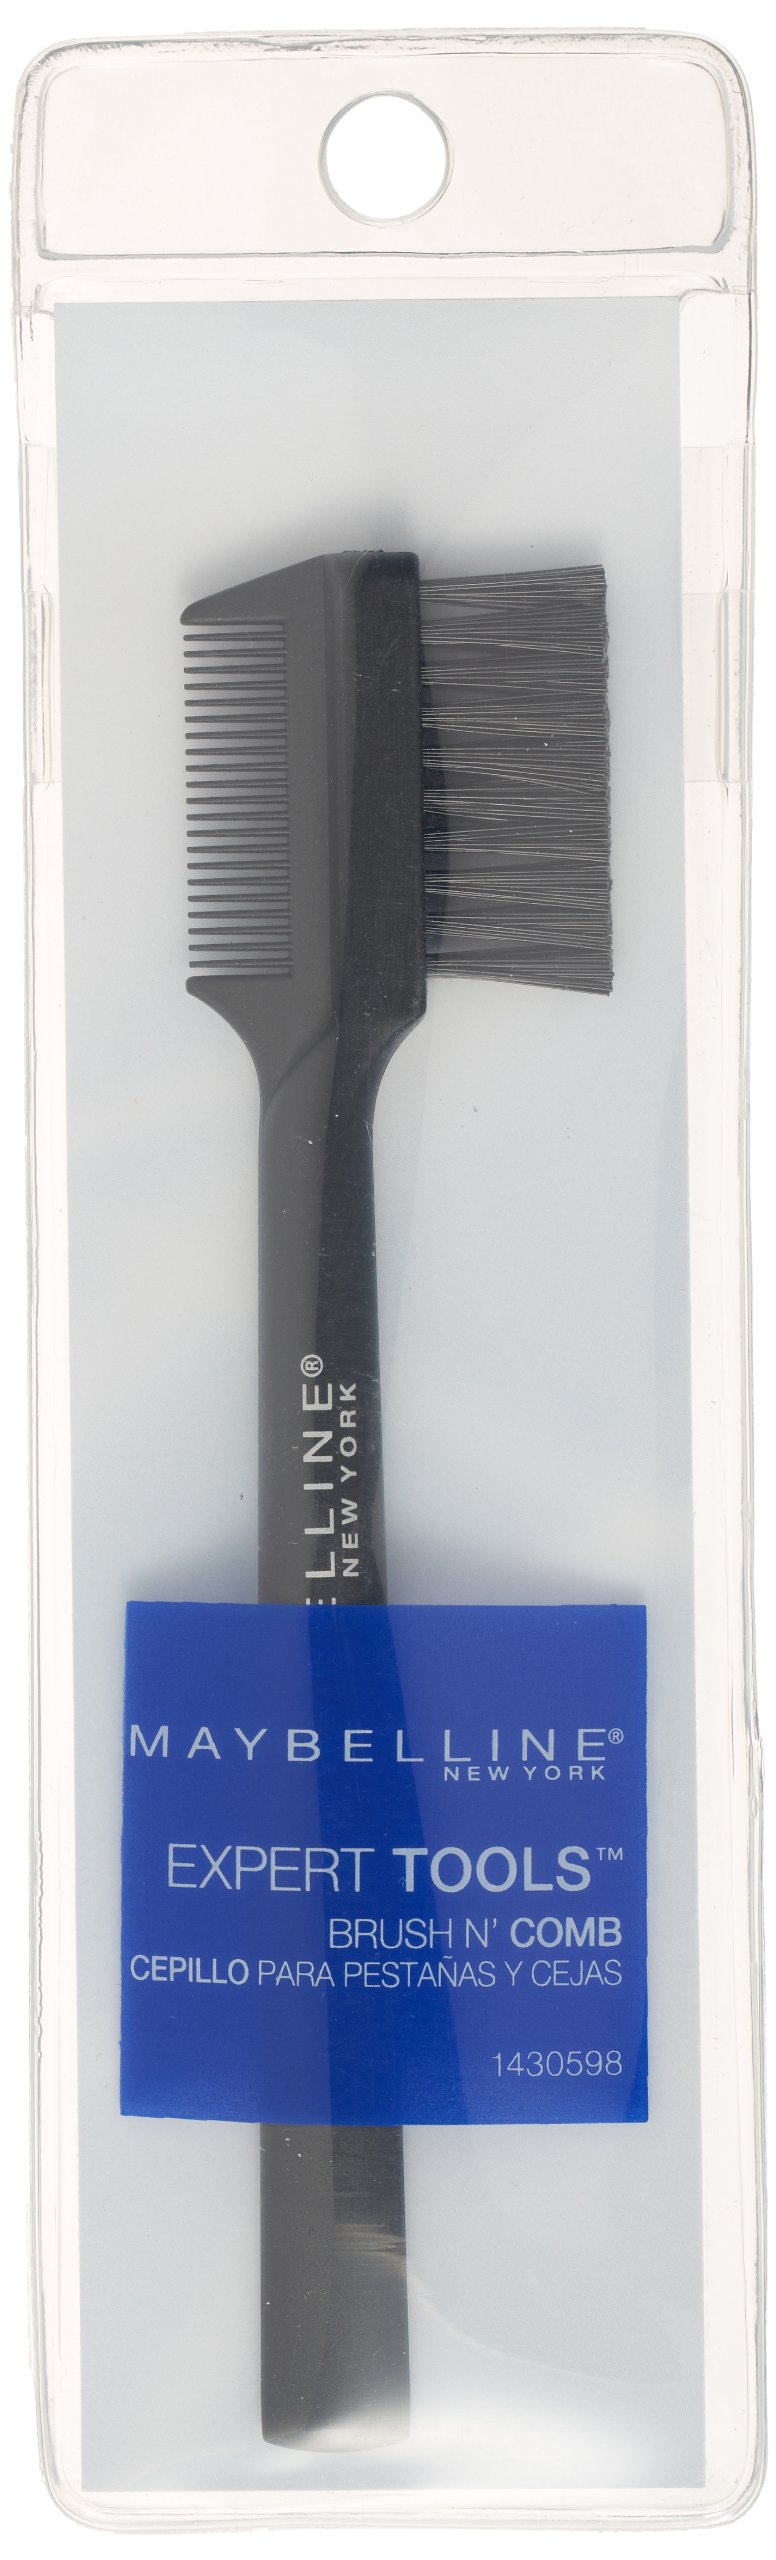 Maybelline New York Expert Tools, Brush 'n Comb